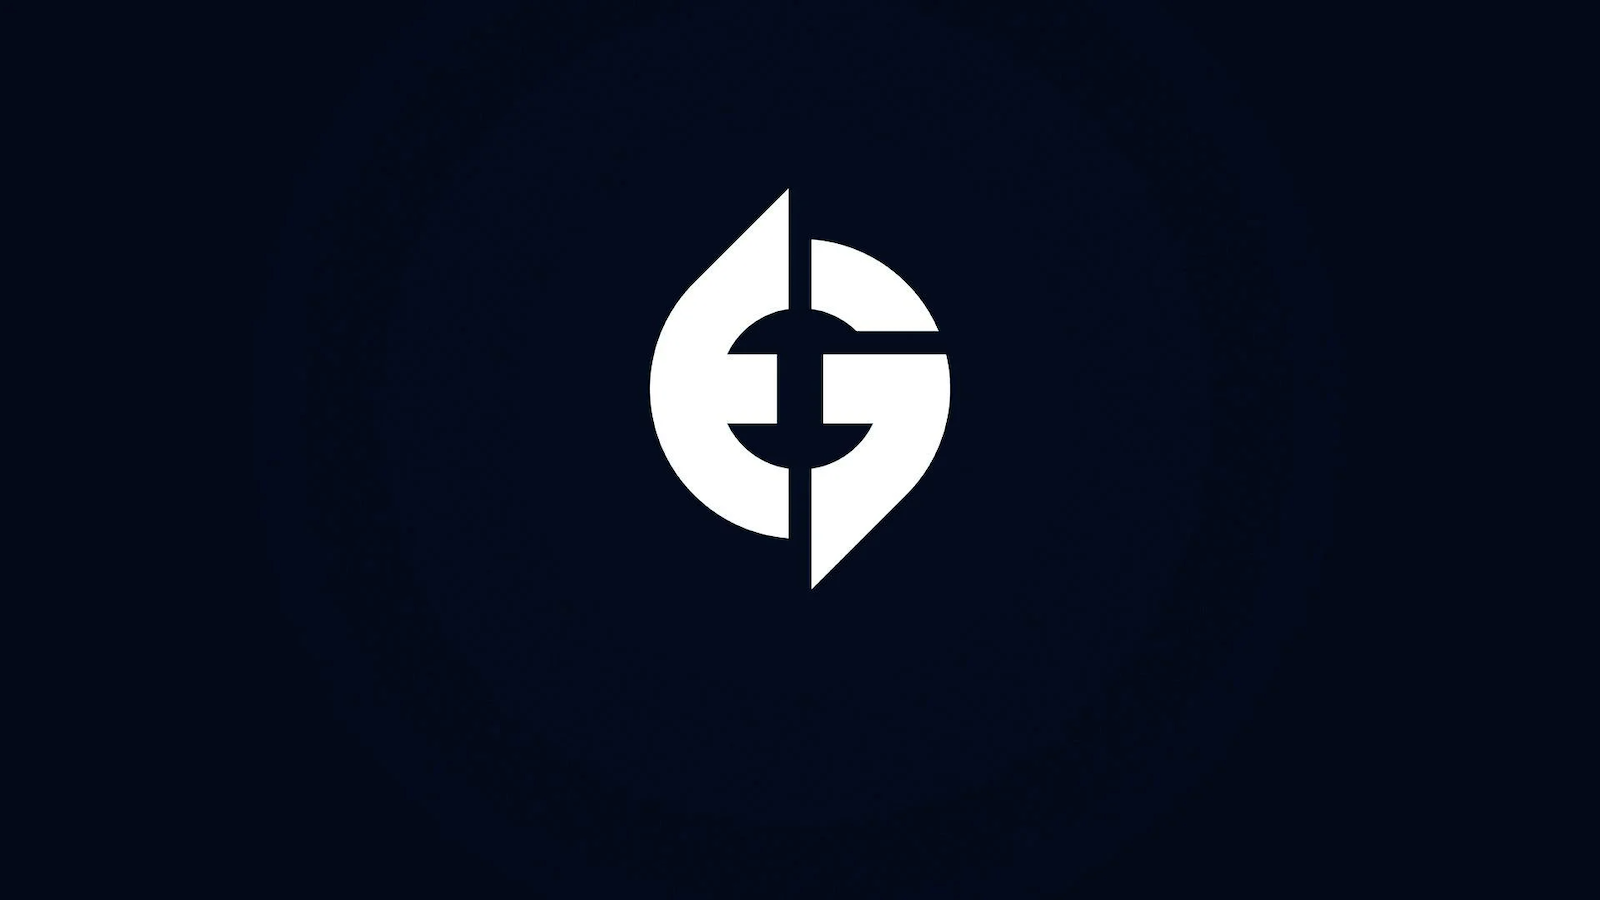 Counter Strike Logo PNG Transparent & SVG Vector - Freebie Supply